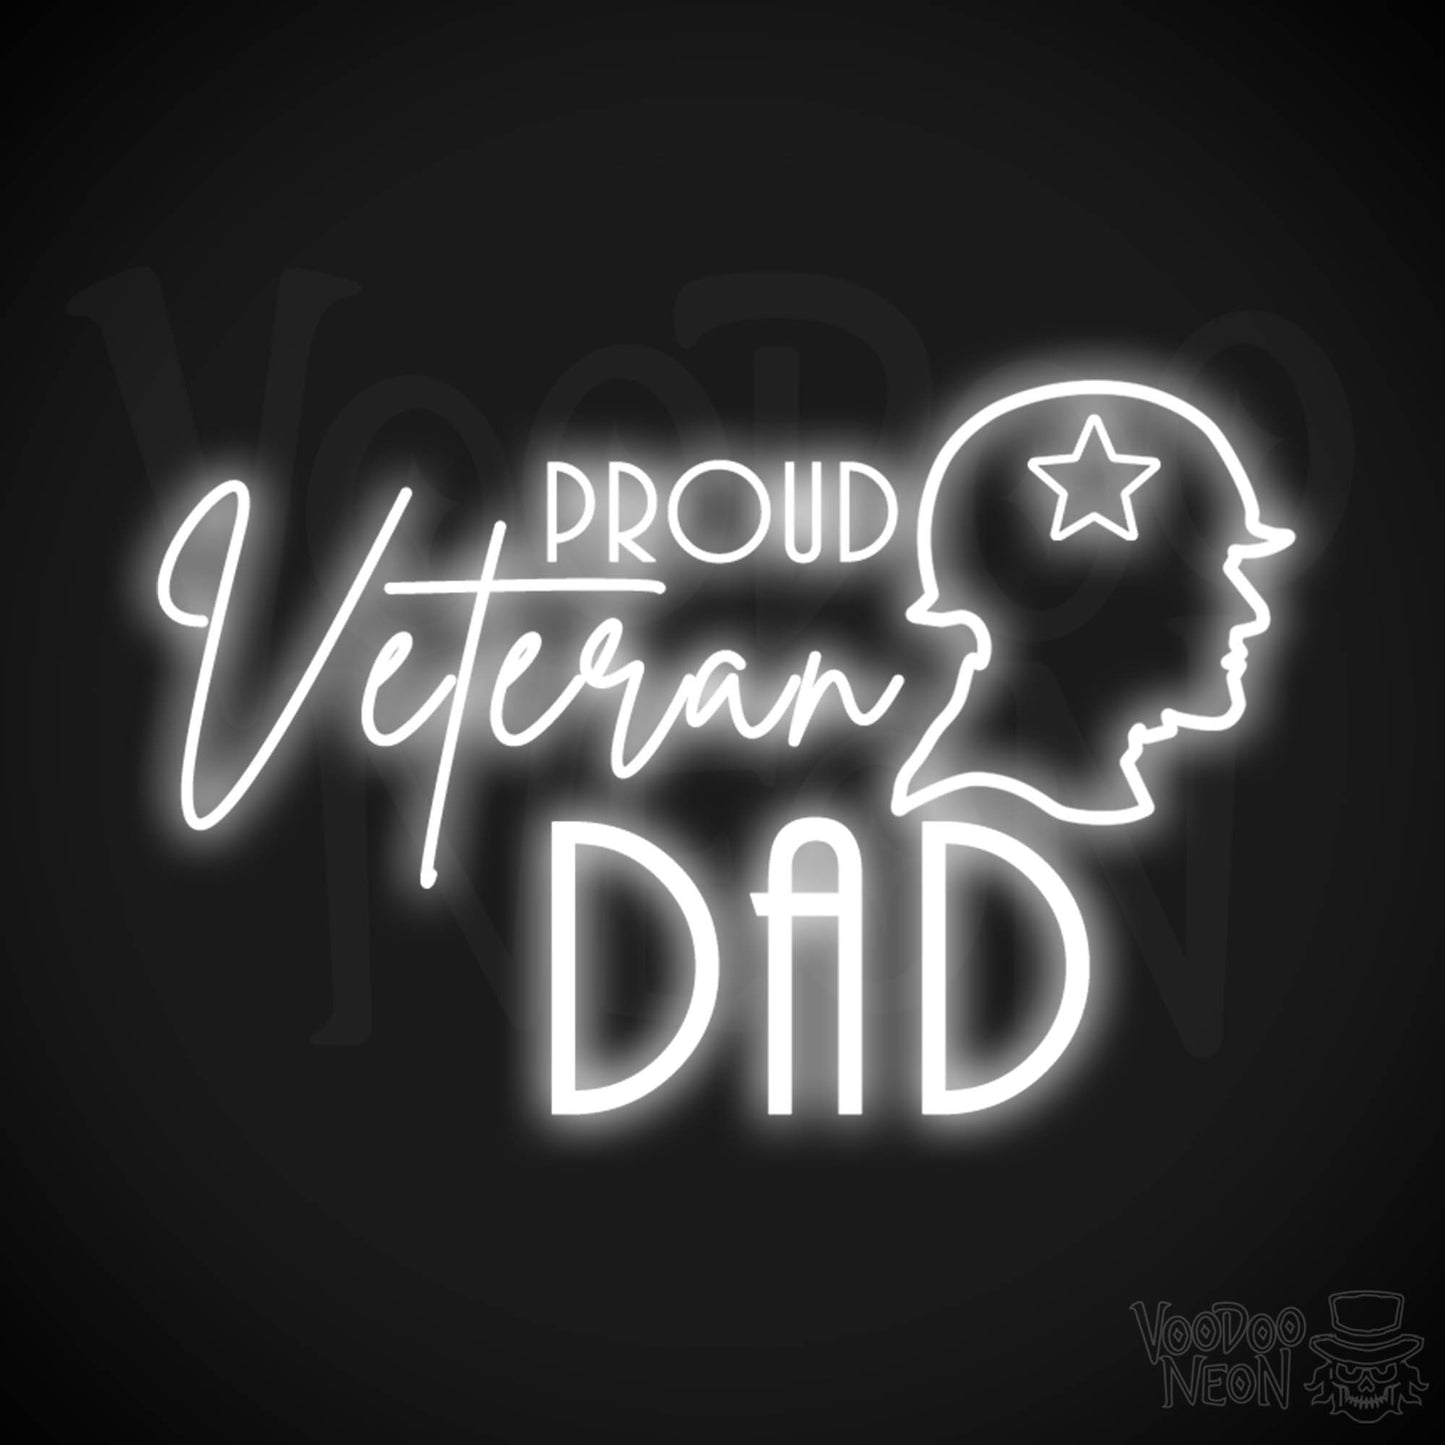 Proud Veteran Dad Neon Sign - Proud Veteran Dad Sign - Neon Veteran Wall Art - Color White